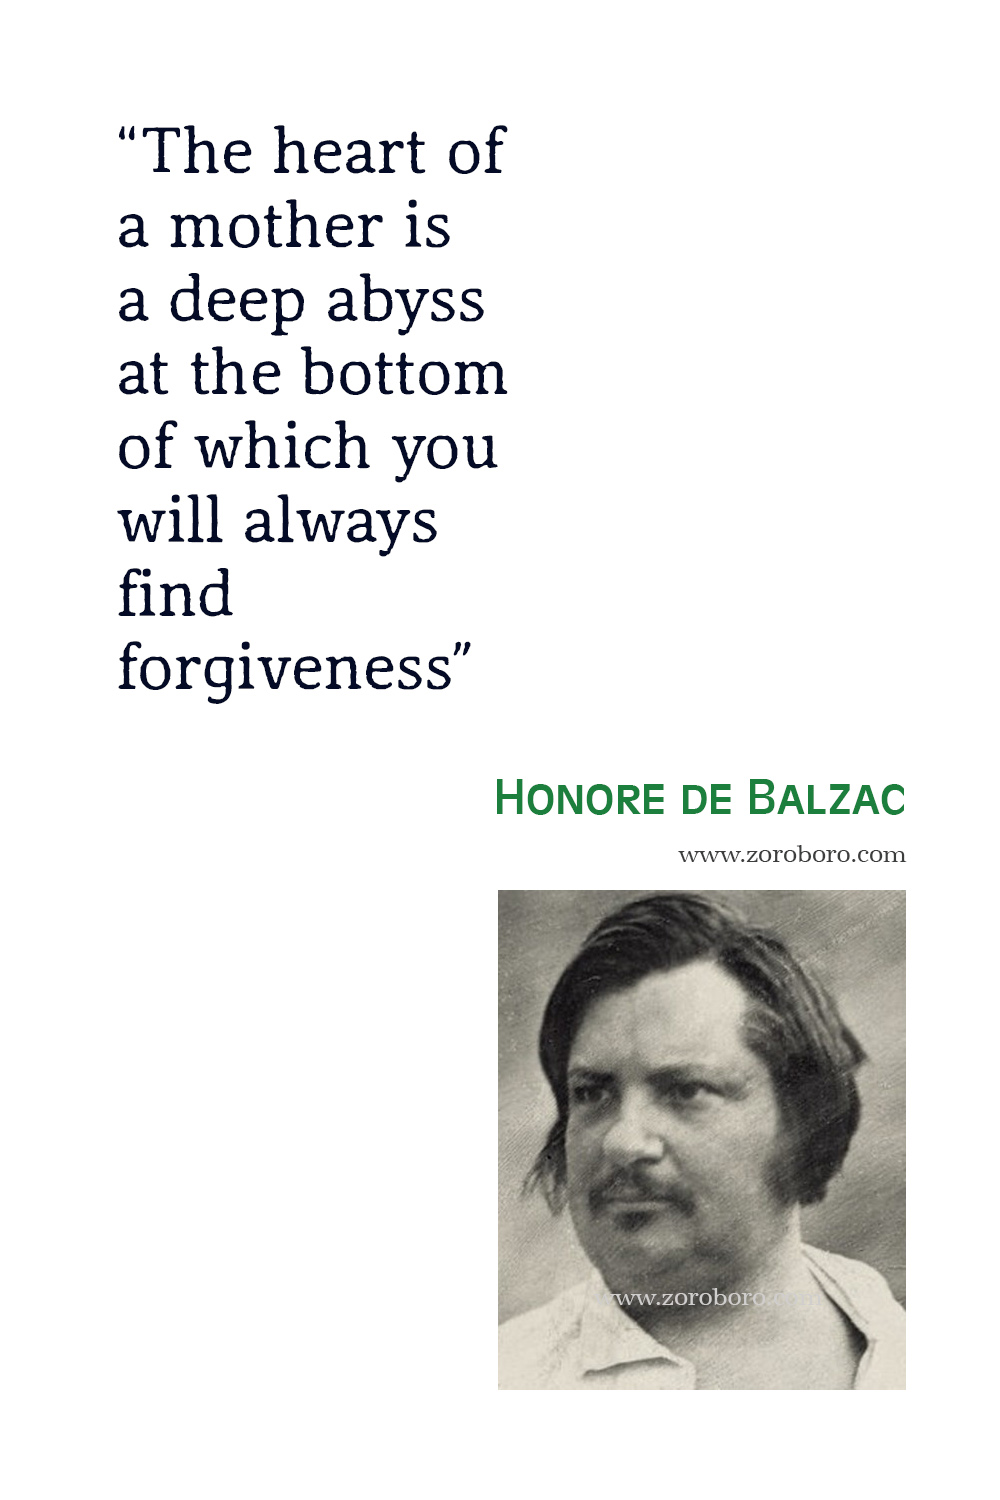 Honore de Balzac Quotes, Honore de Balzac Père Goriot Quotes, Honoré de Balzac Books, Honoré de Balzac Famous Works, Feelings, Heart, Husband, Literature, Love, Passion, Virtue.